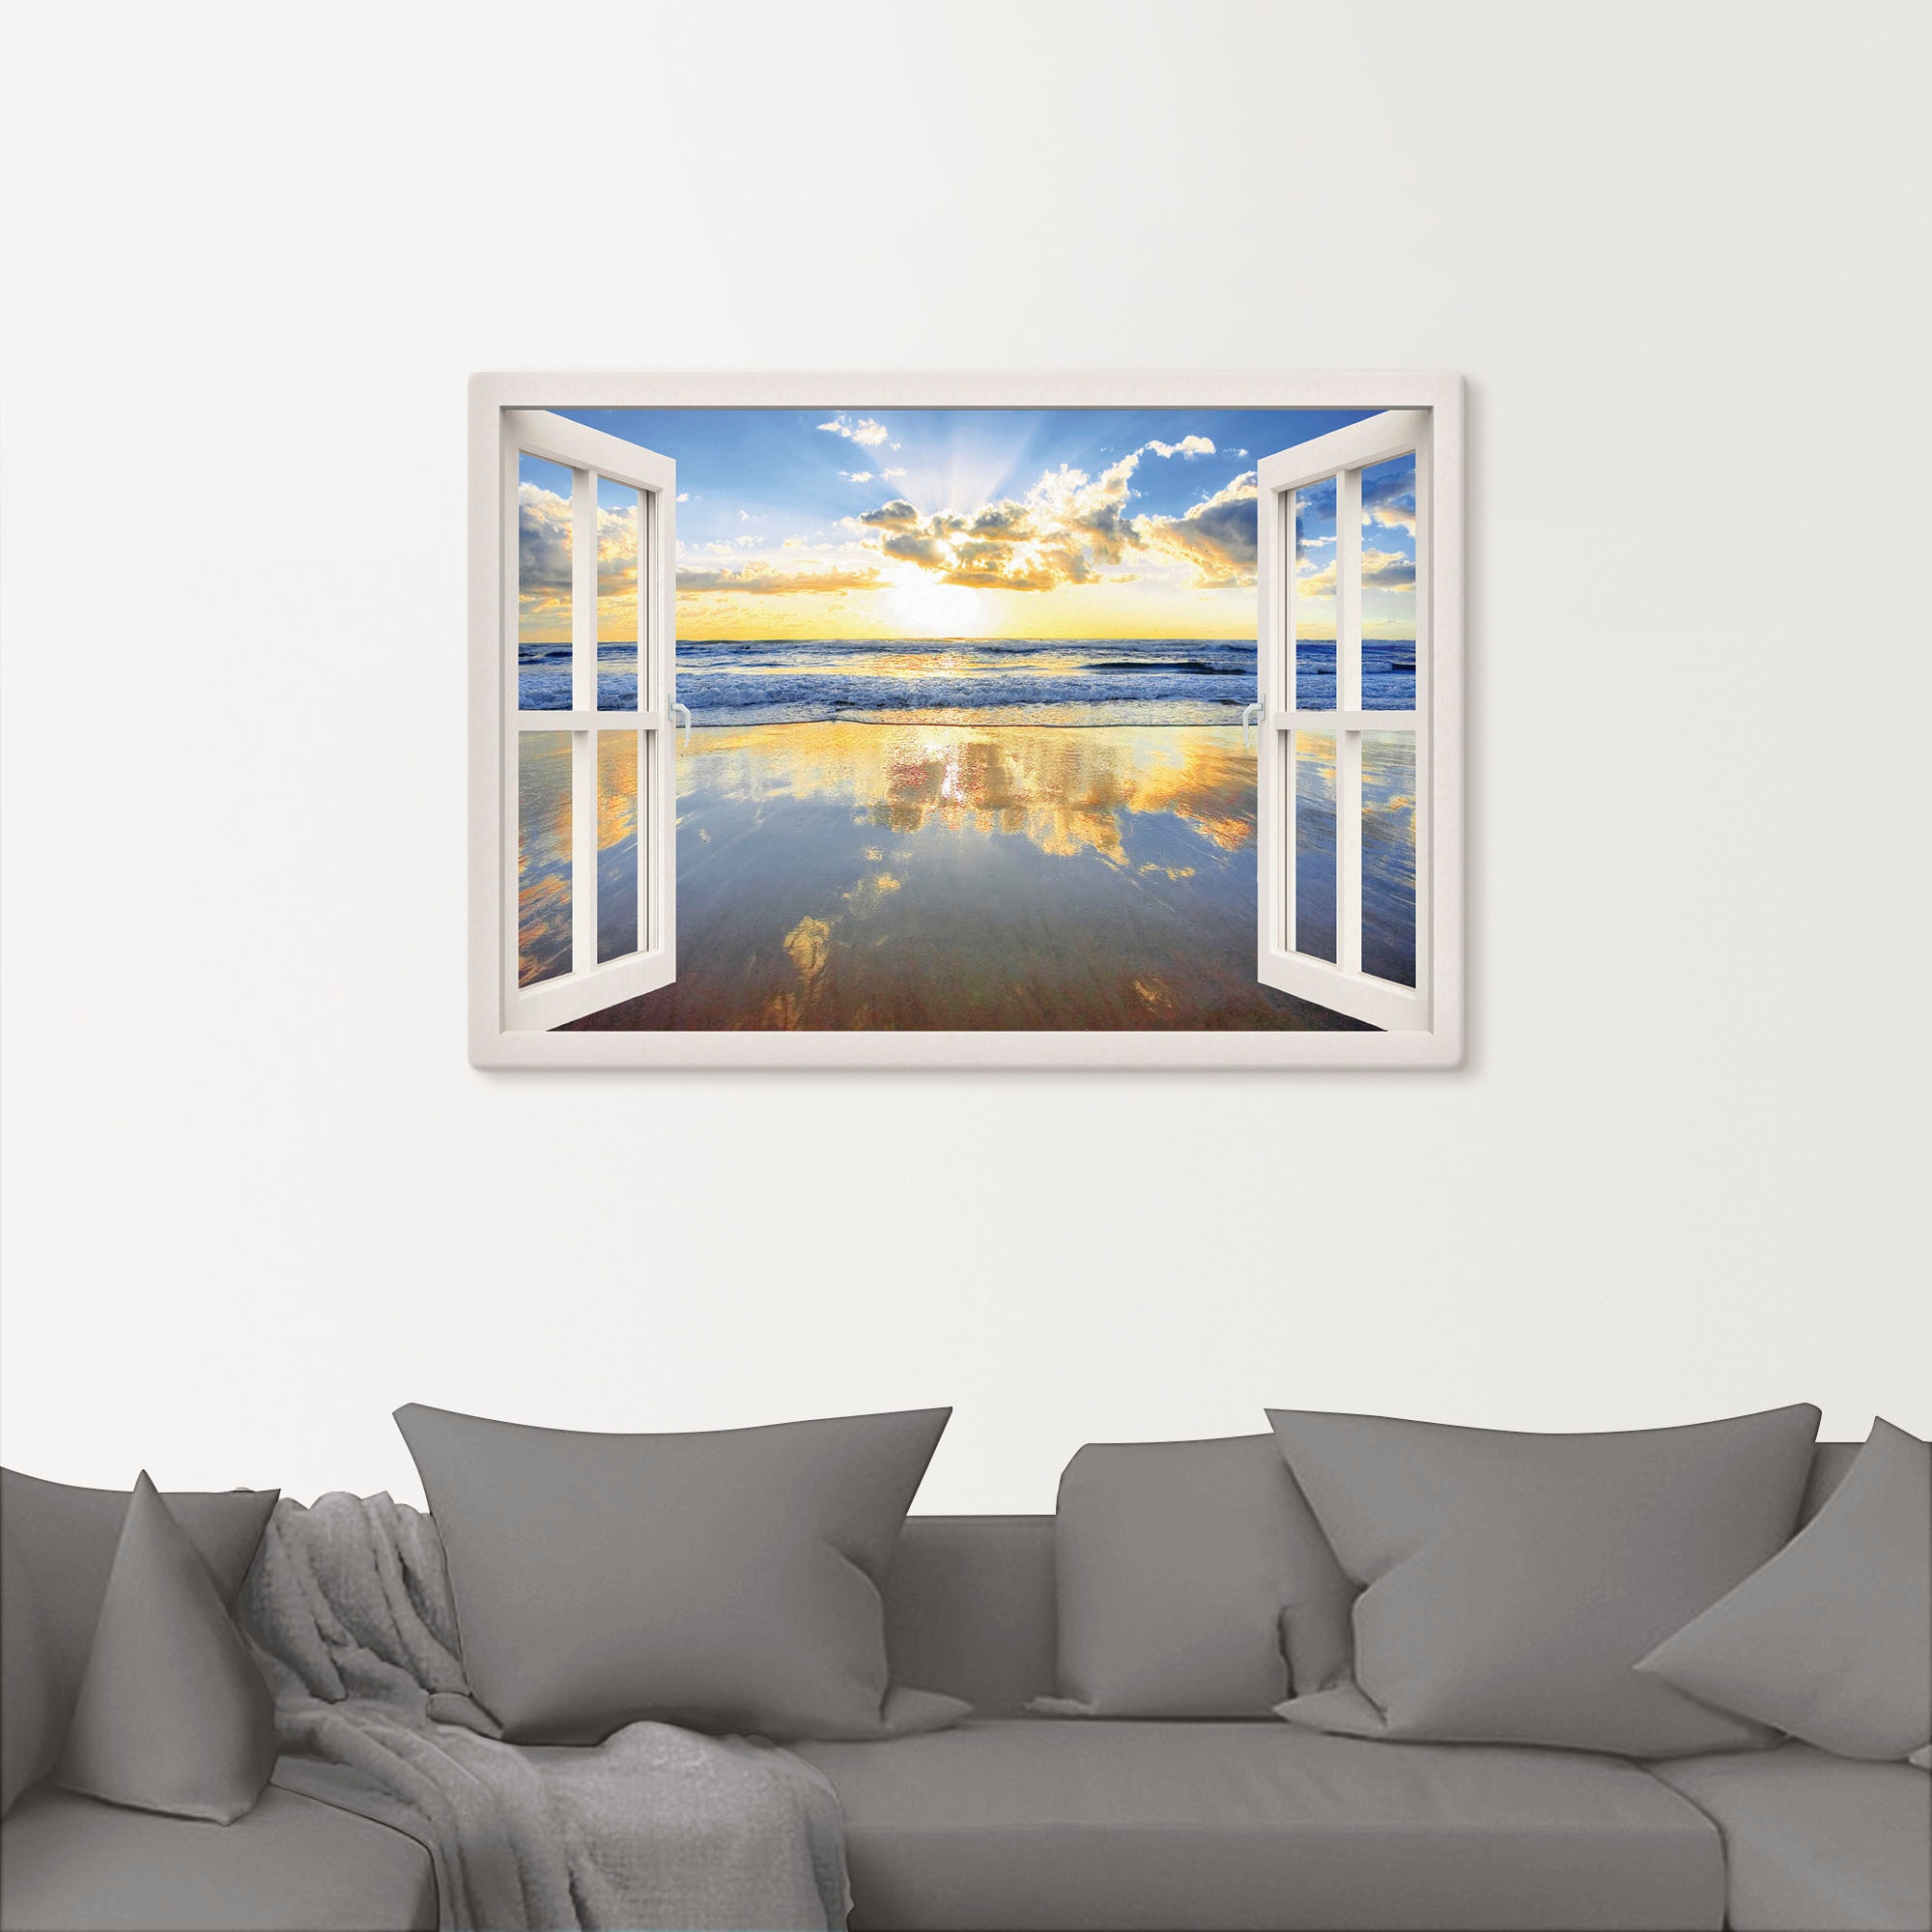 Artland Leinwandbild »Fensterblick Sonnenaufgang Ozean«, Fensterblick, (1 St.), auf Keilrahmen gespannt